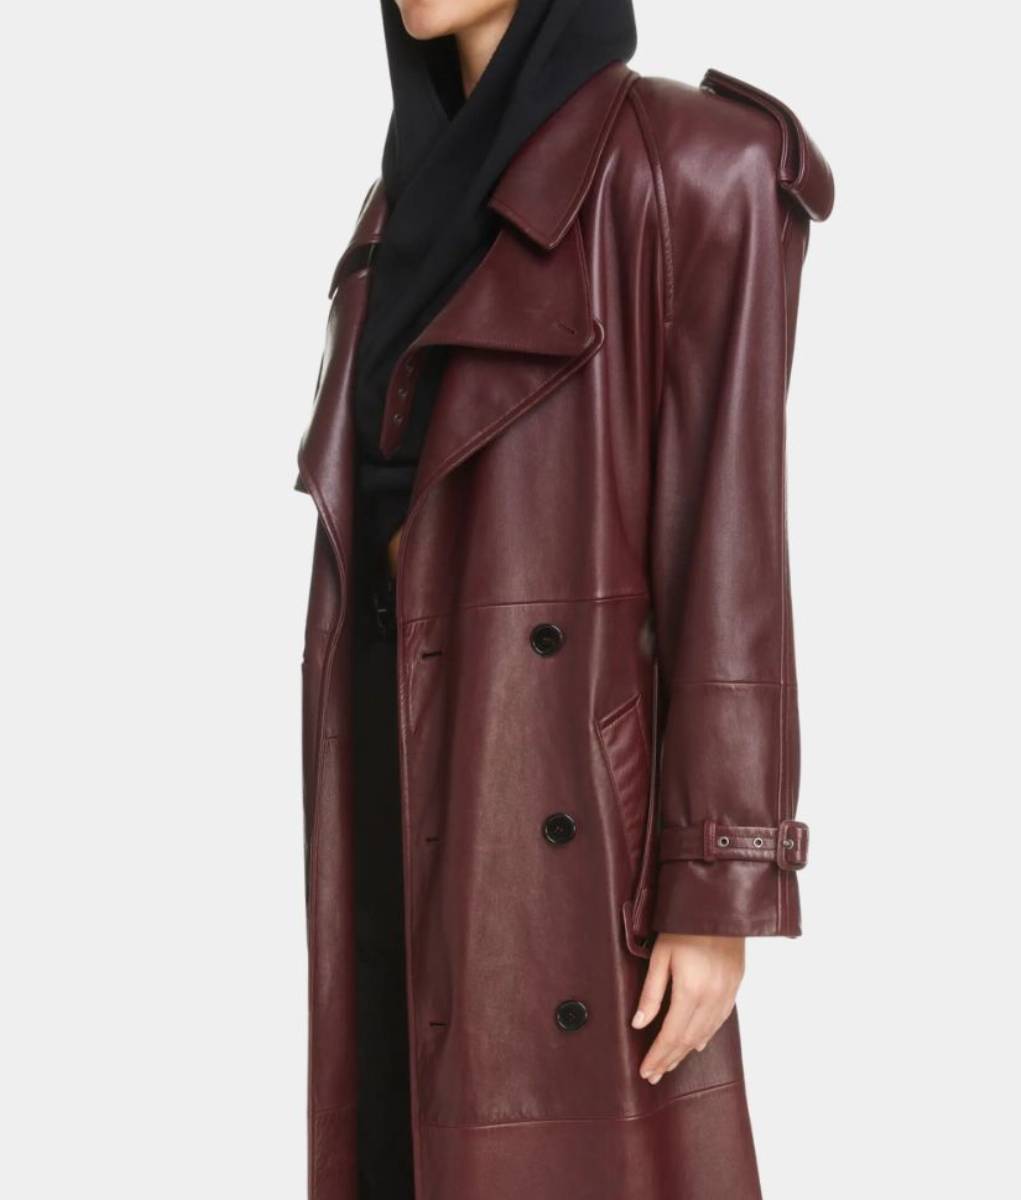 AHS Delicate Kim Kardashian aka Siobhan Walsh Seinfeld Long Burgundy Leather Coat – Right View – 1